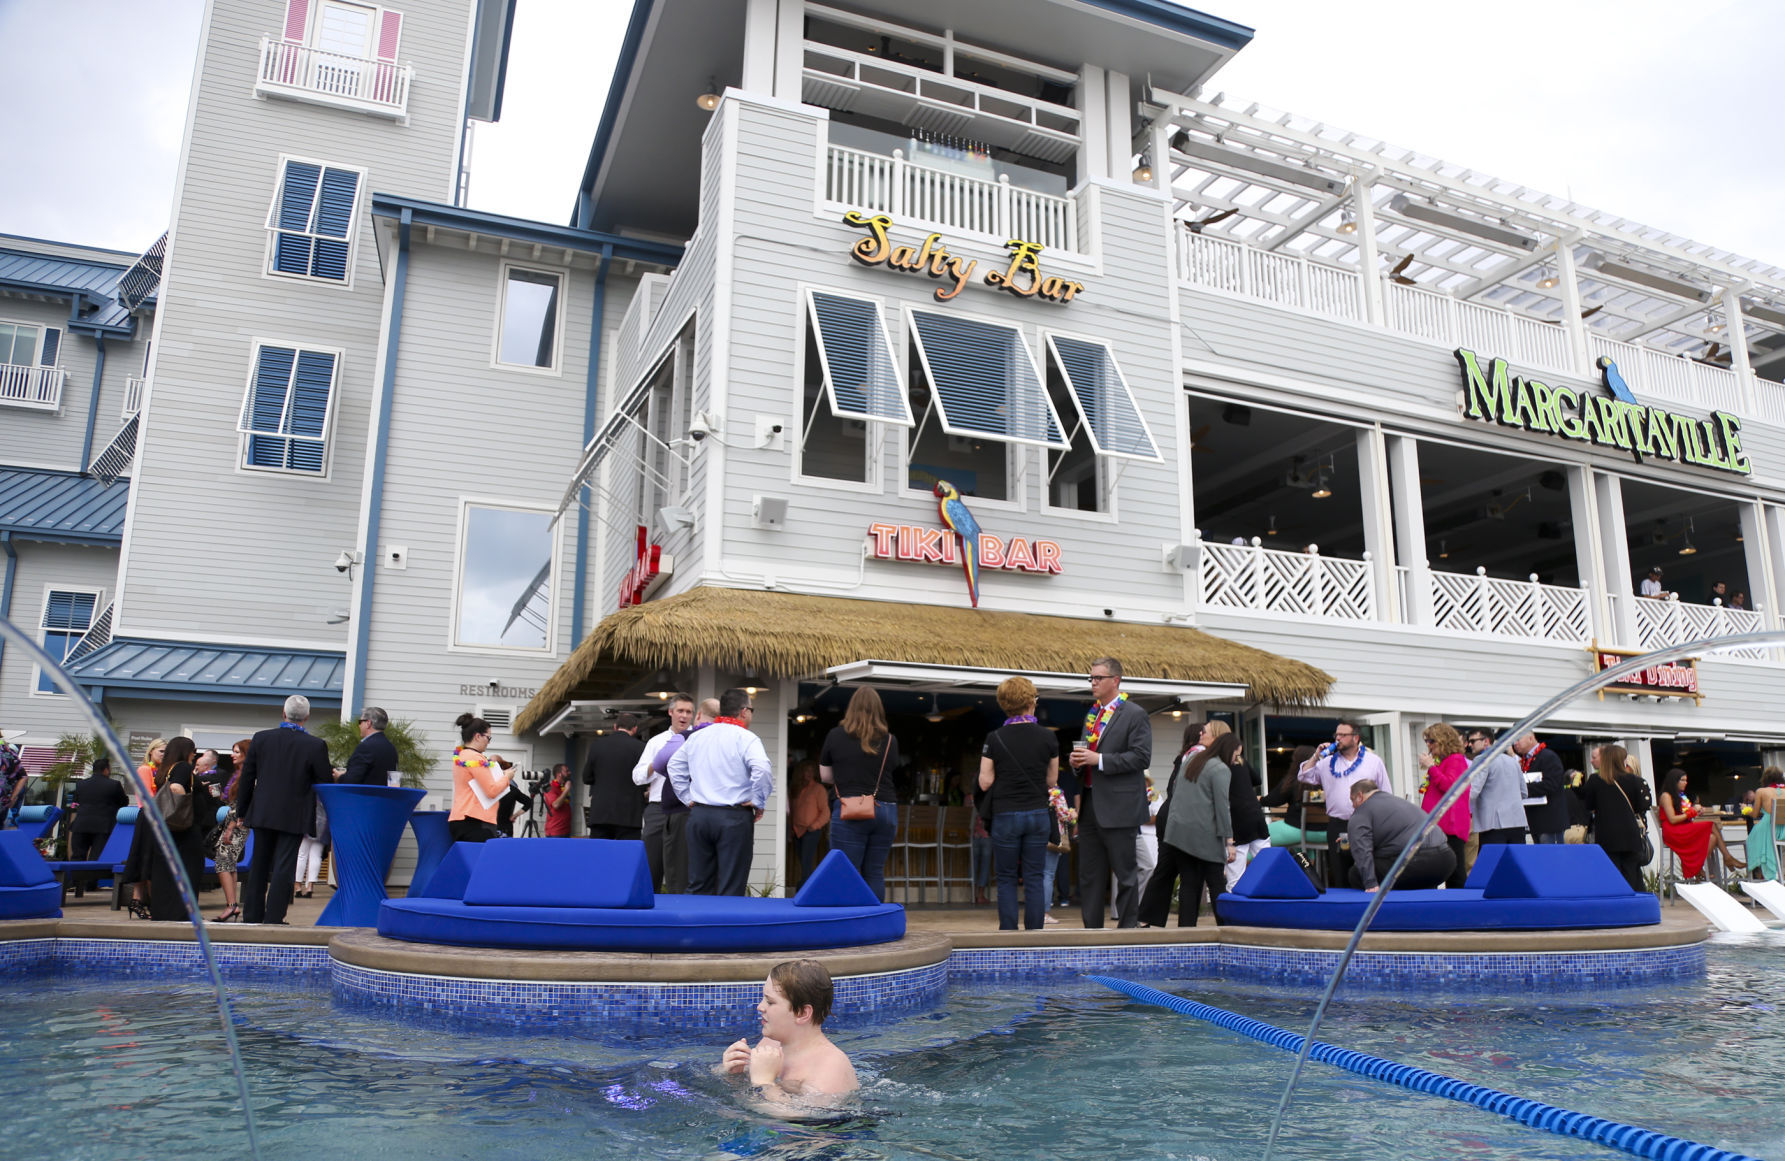 river spirit hotel and casino pool